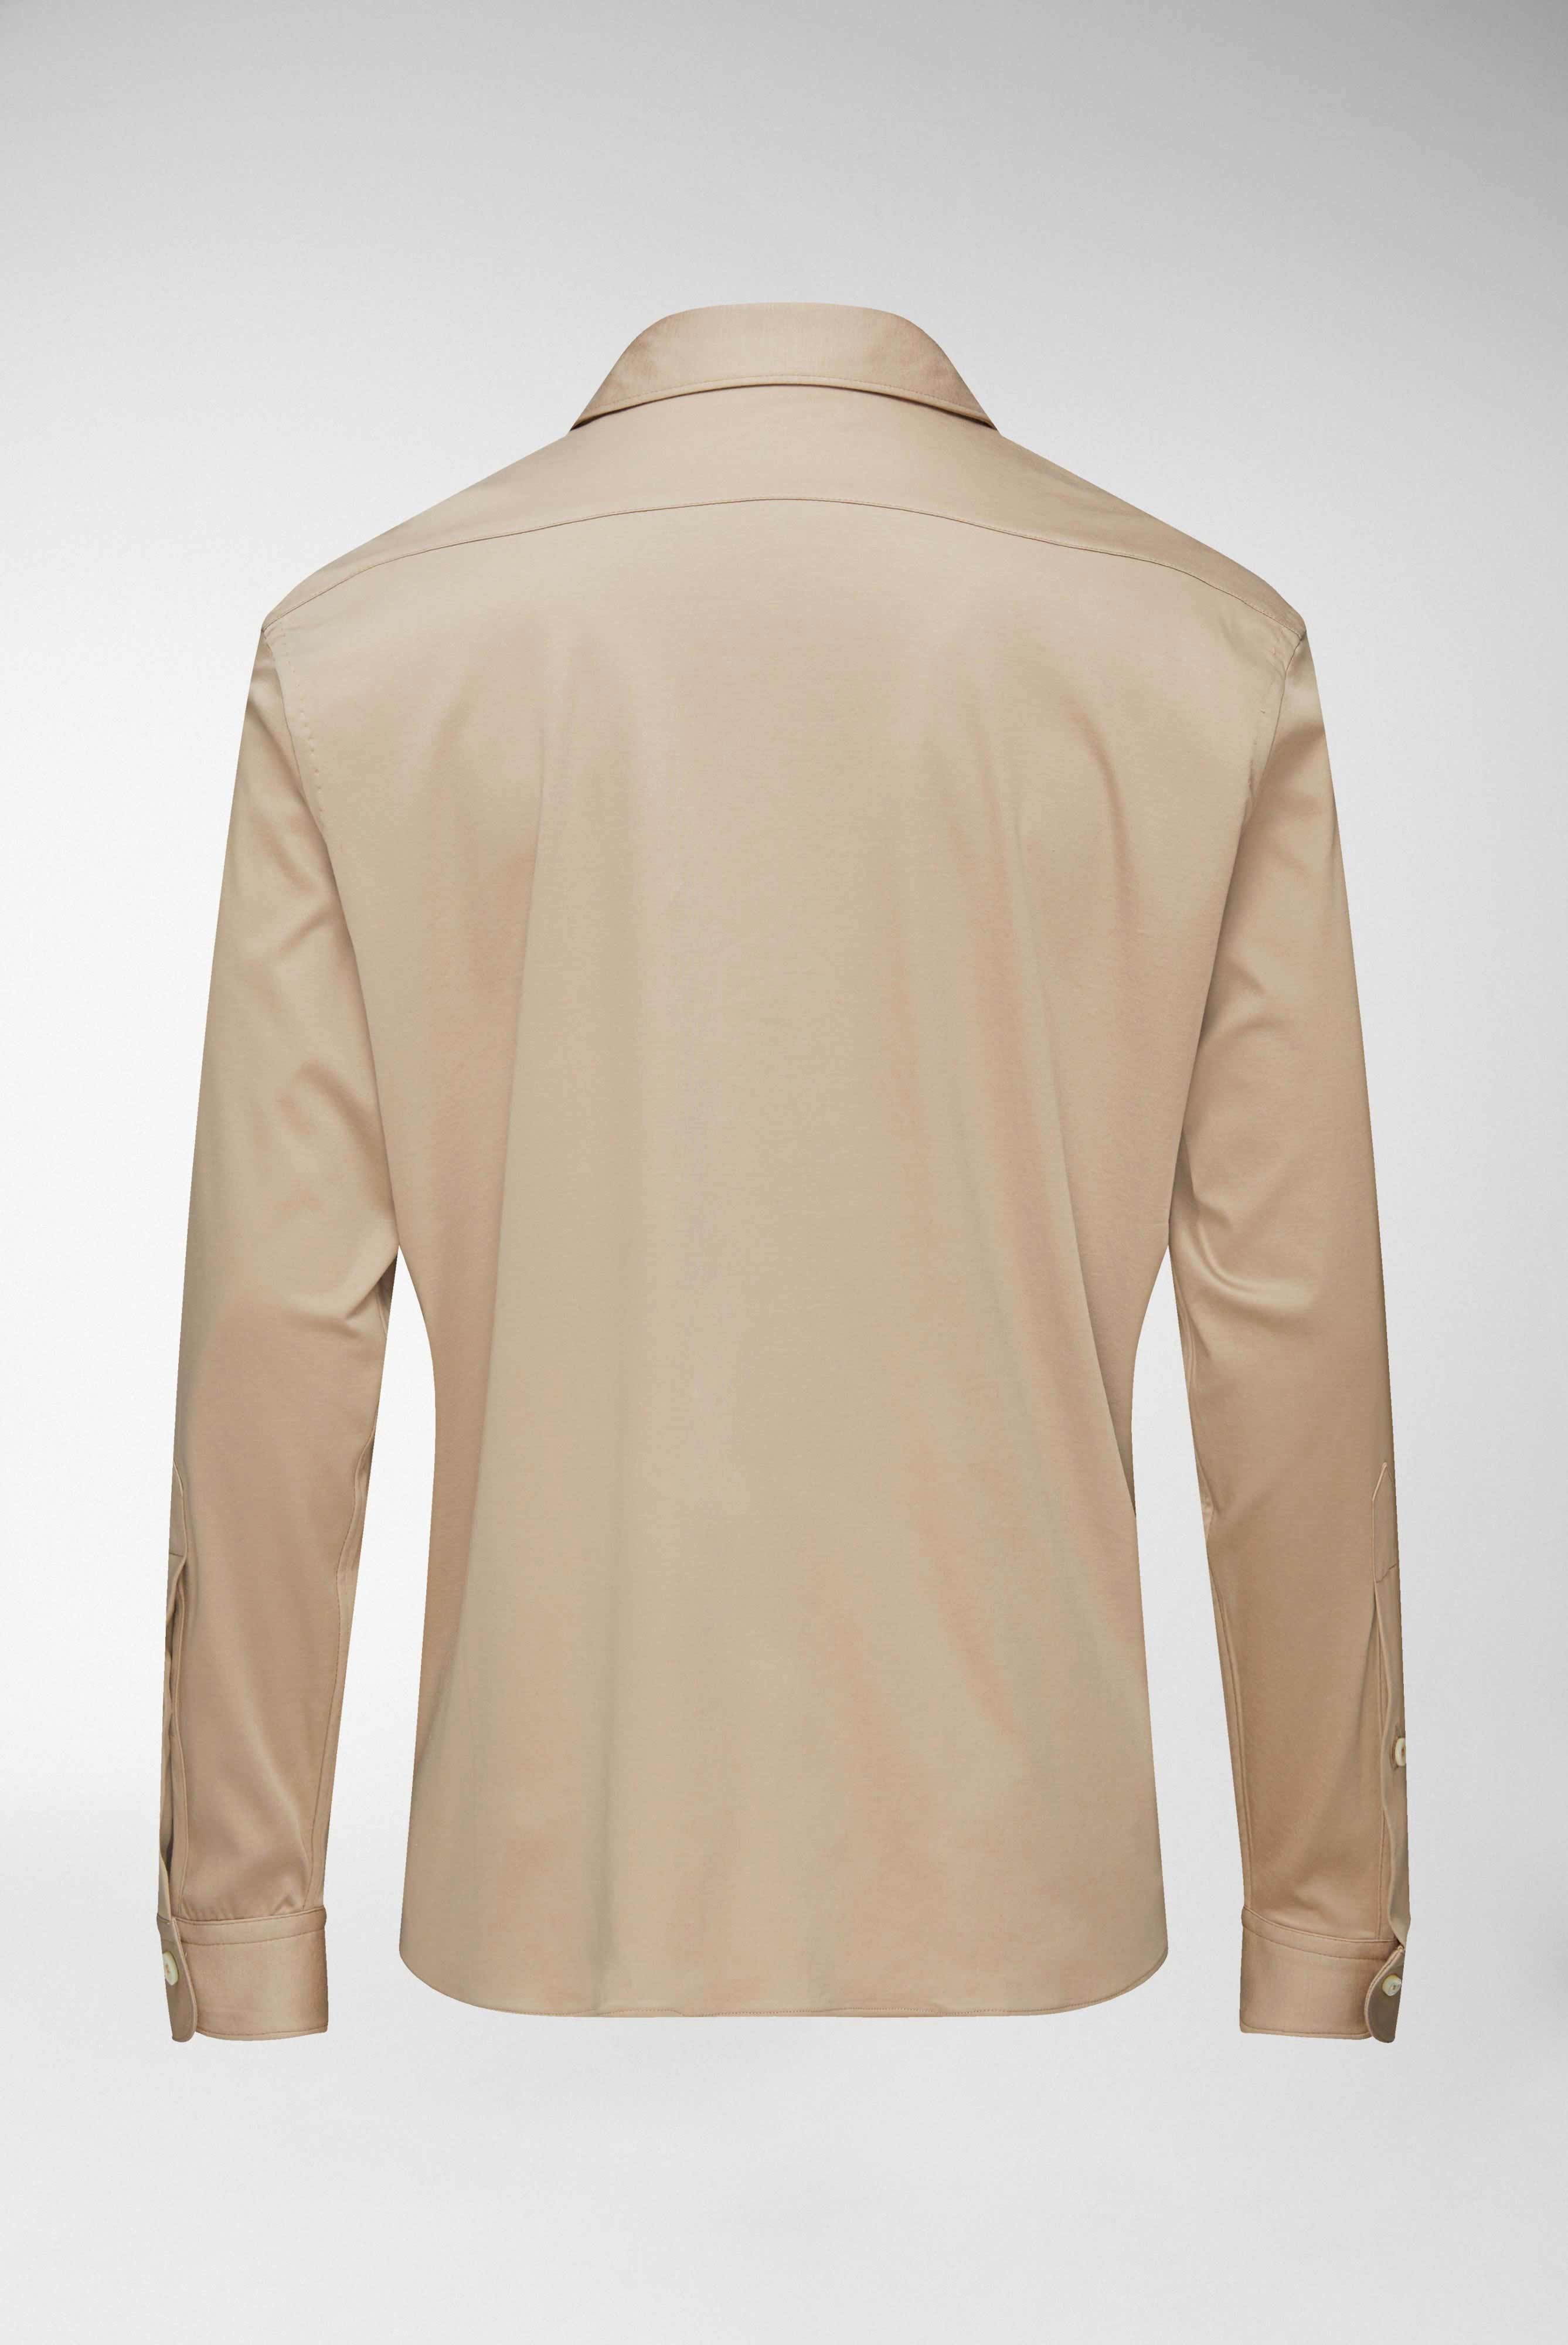 Casual Shirts+Jersey Shirt Swiss Cotton Tailor Fit+20.1683.UC.180031.140.XXL